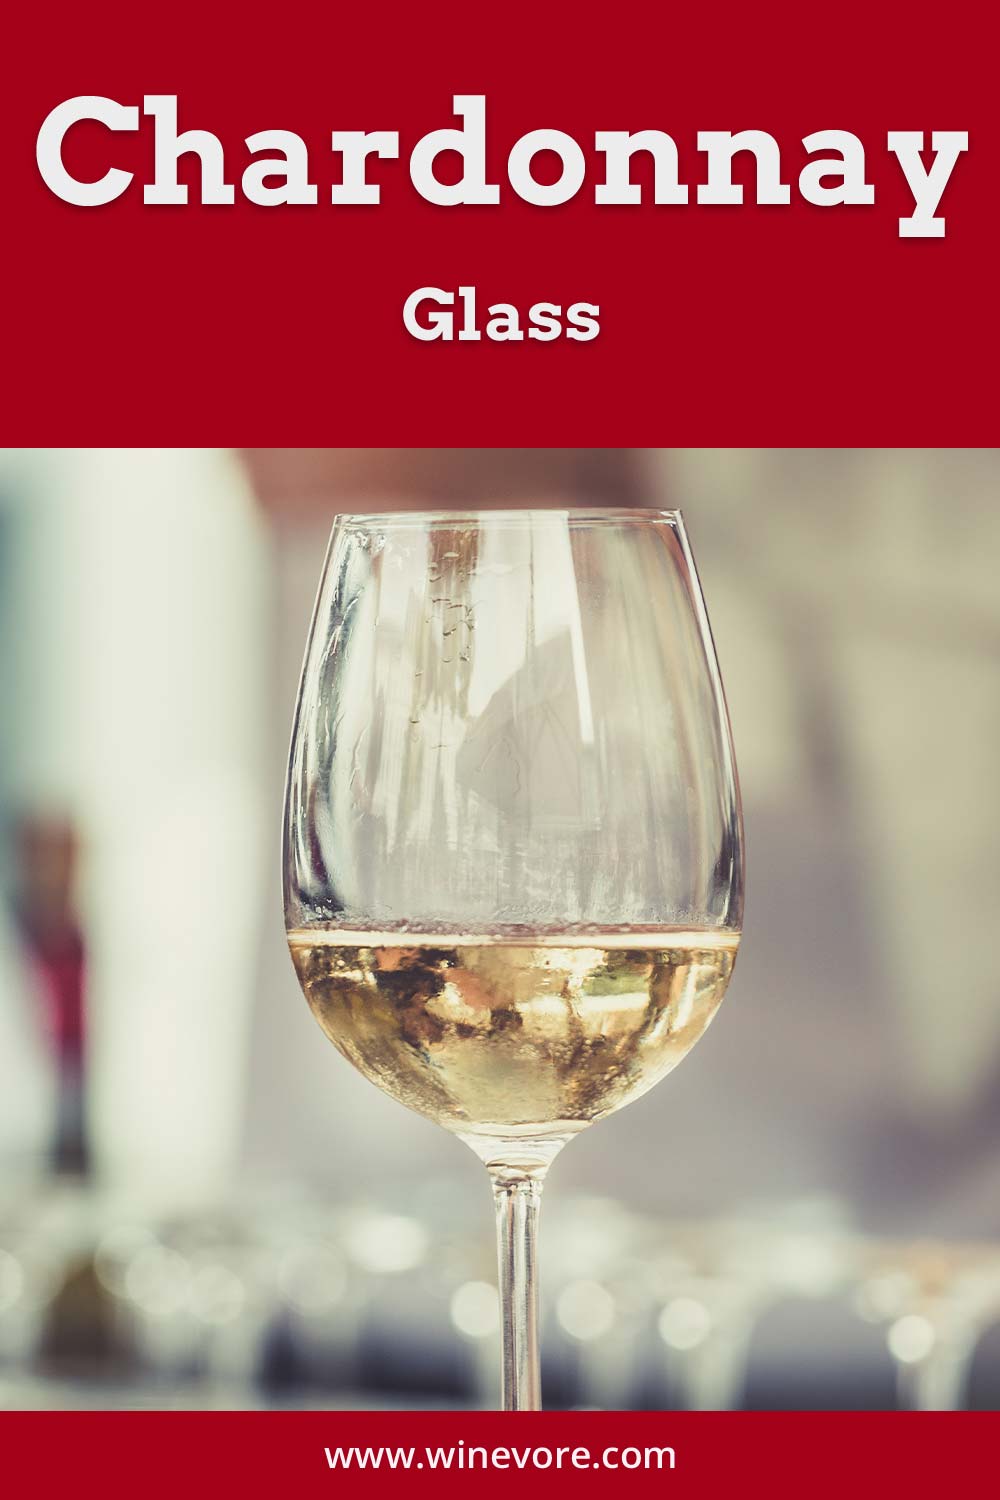 A Chardonnay Glass